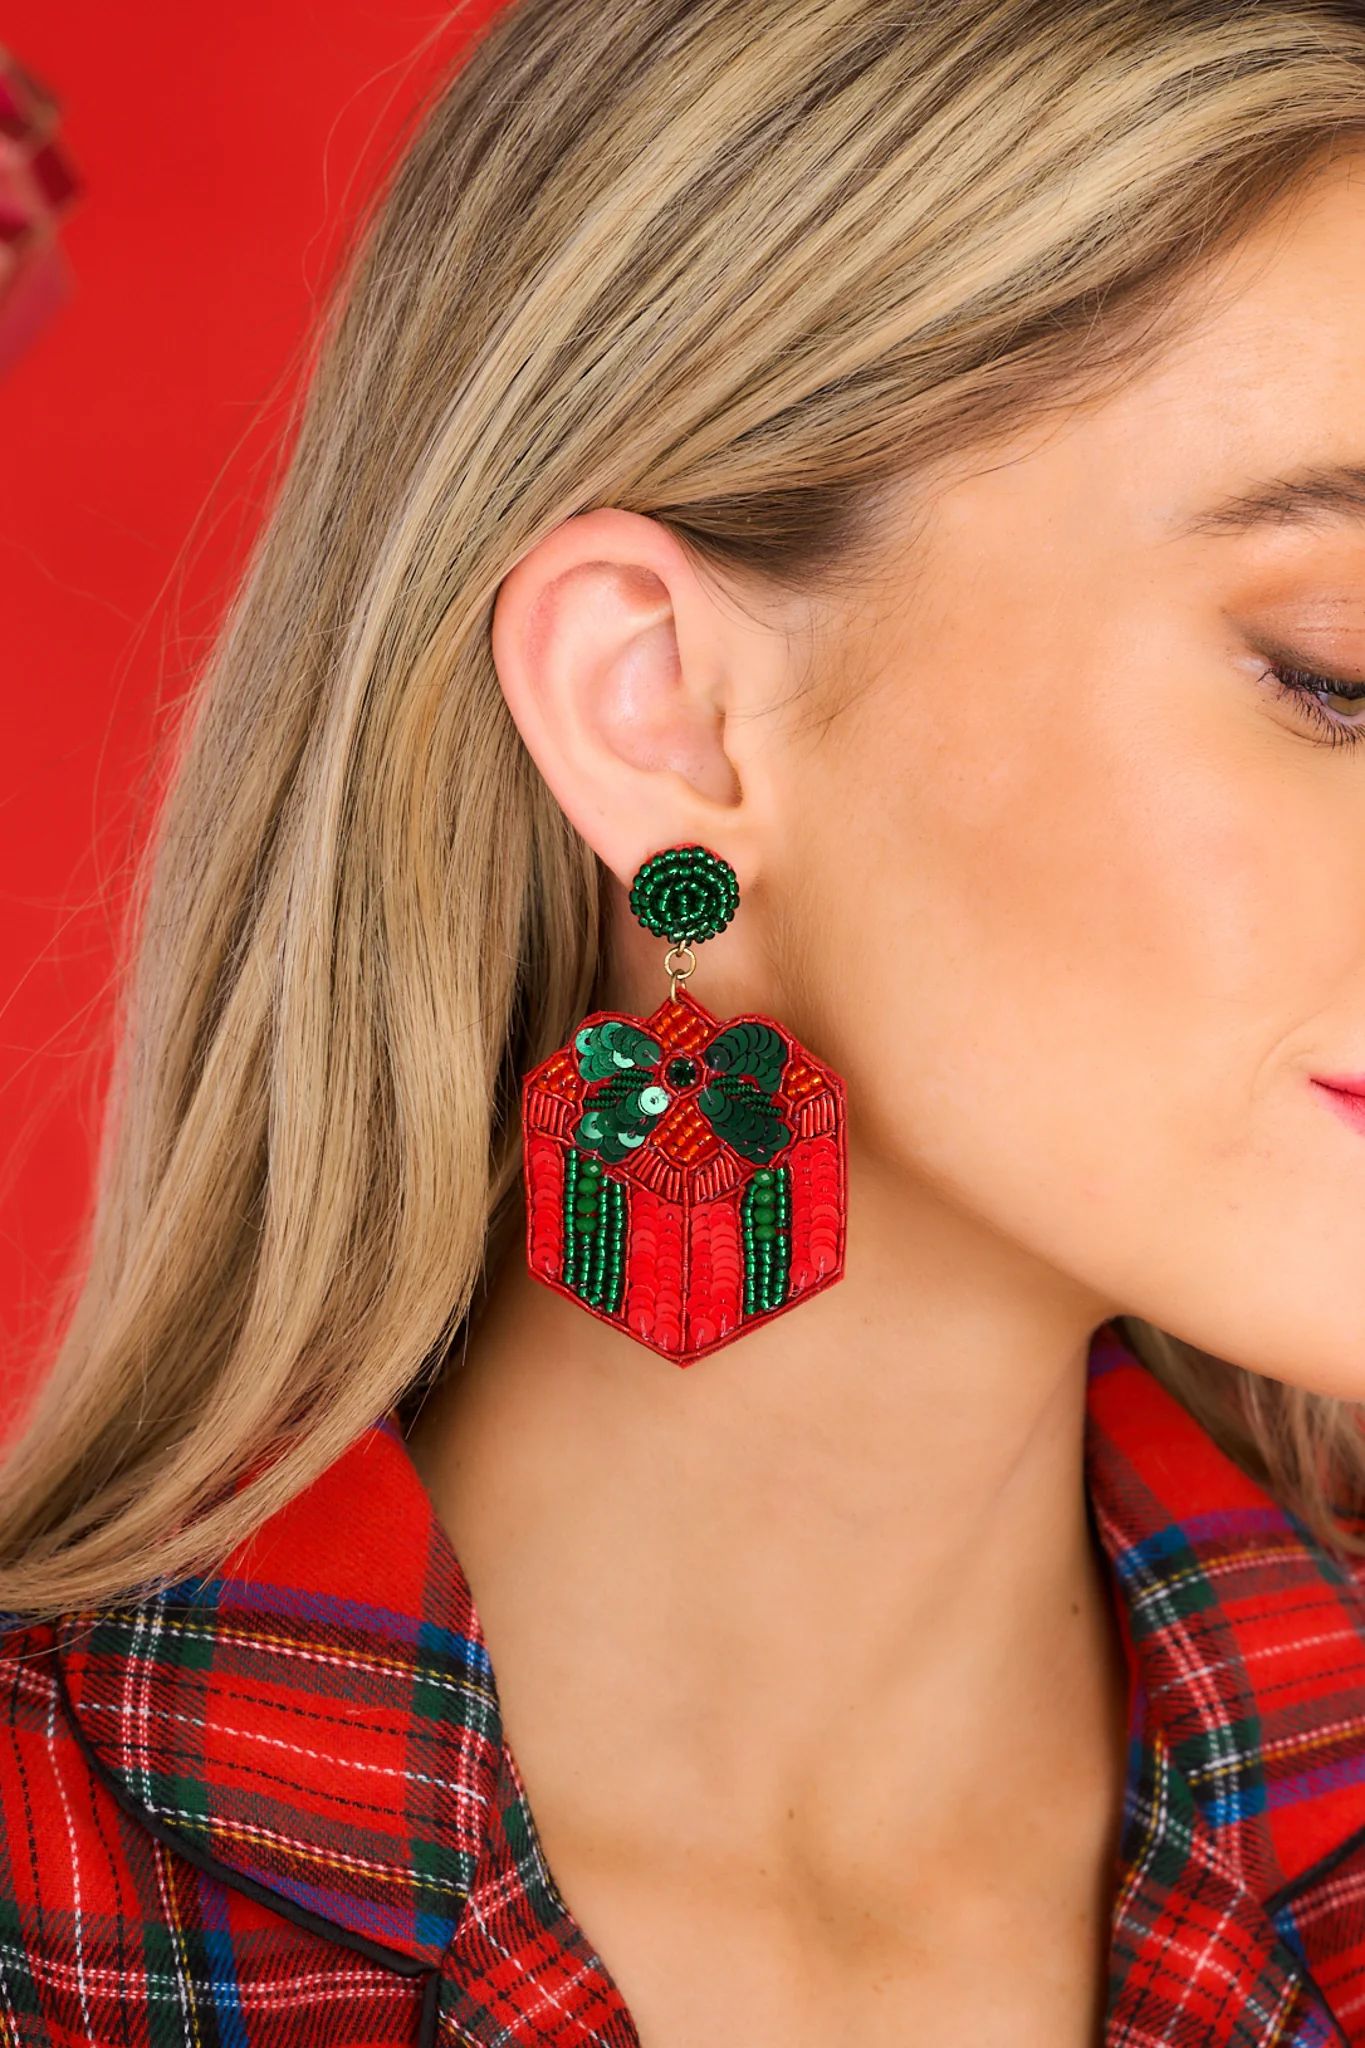 My Favorite Gift Red Beaded Earrings | Red Dress 